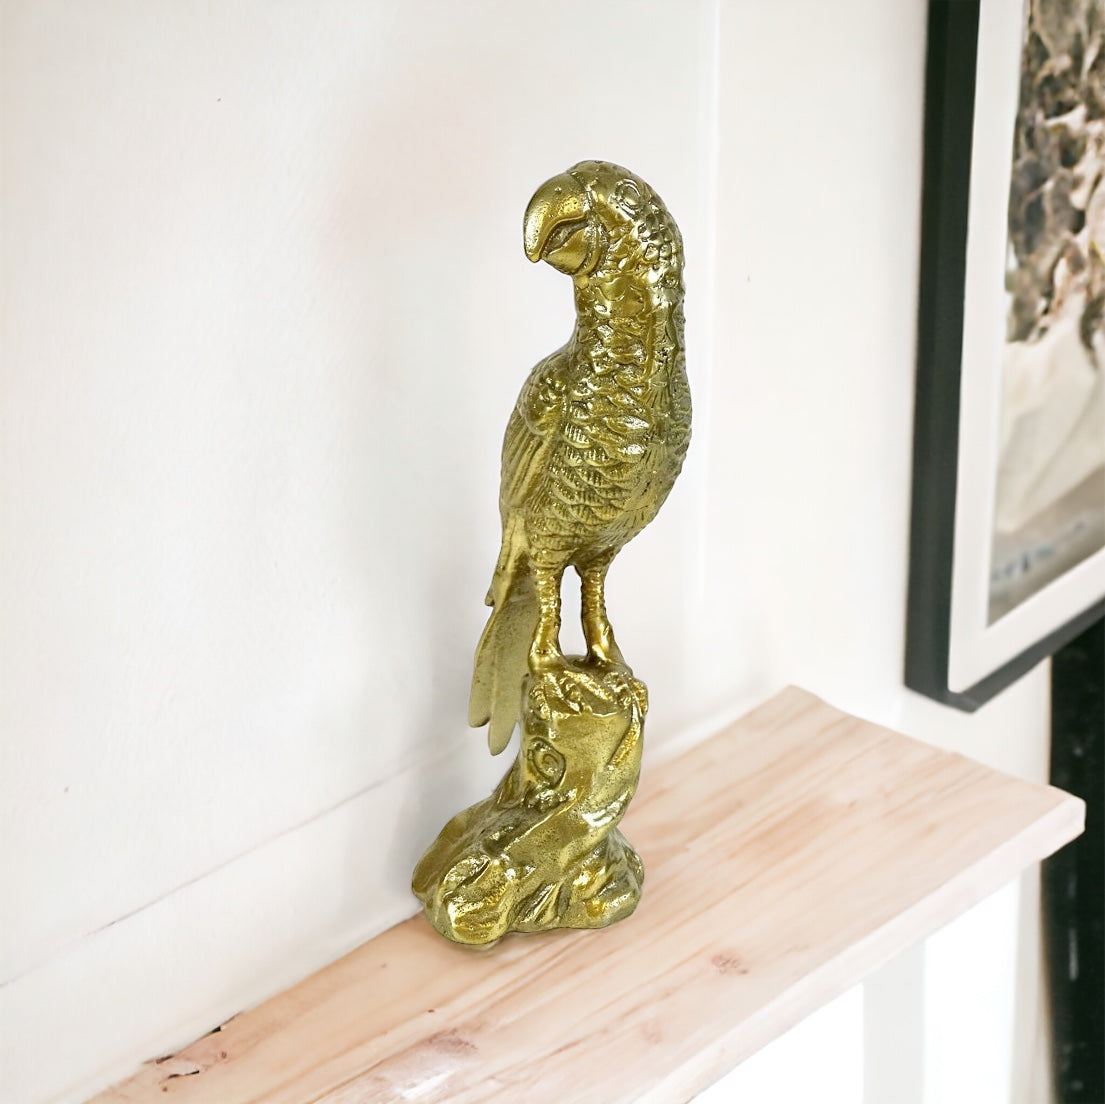 Parrot Bird Vintage Brass Decorative - The Renmy Store Homewares & Gifts 